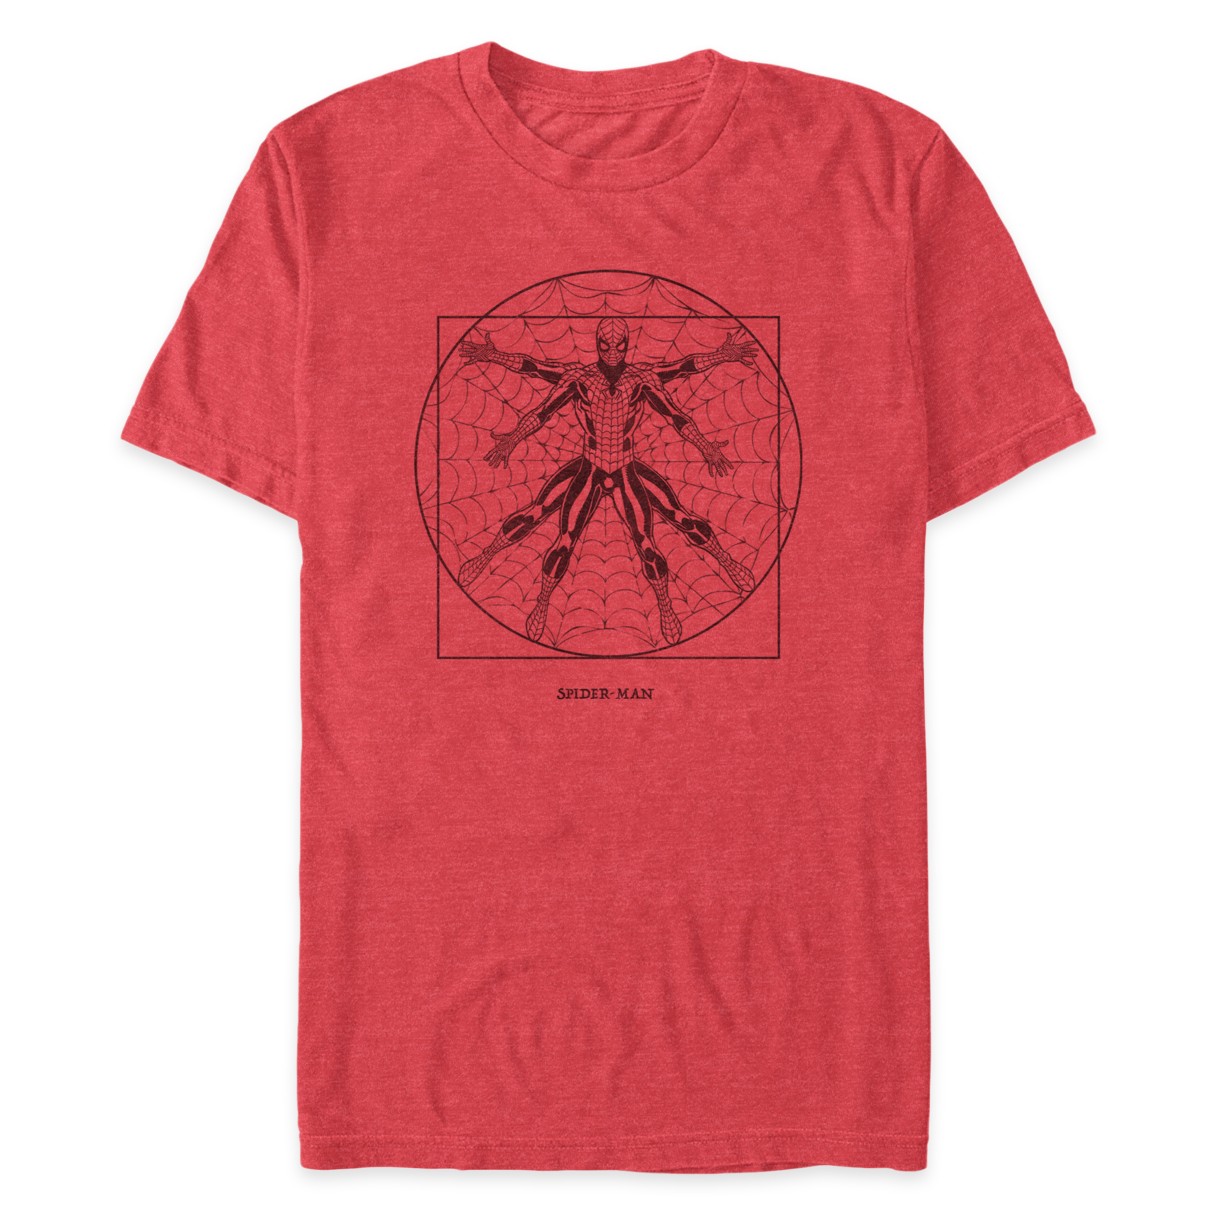 Vitruvian Spider-Man T-Shirt for Adults